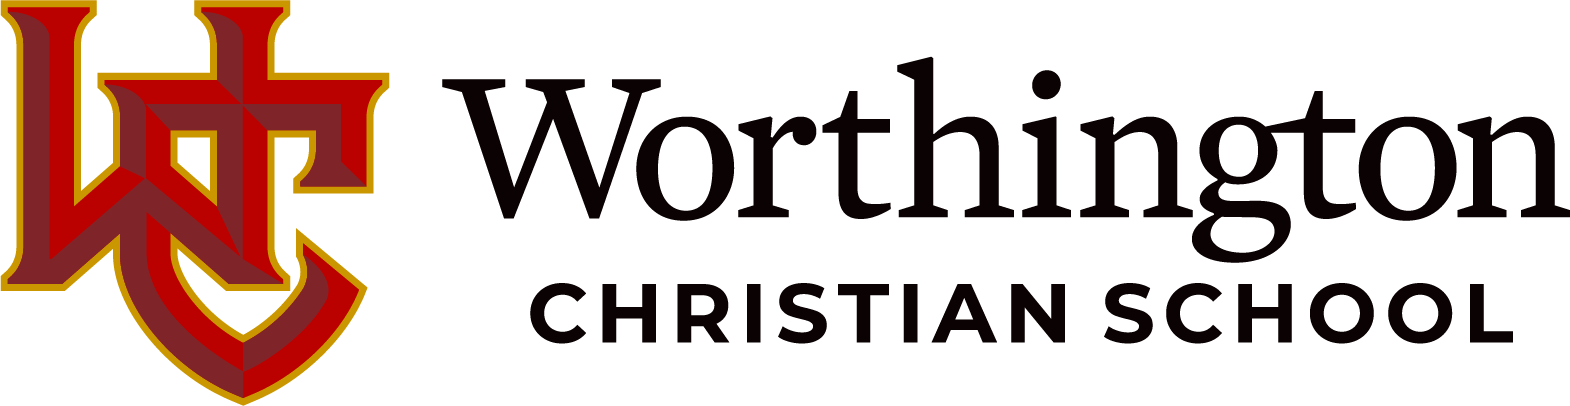 Worthington Christian Schools logo